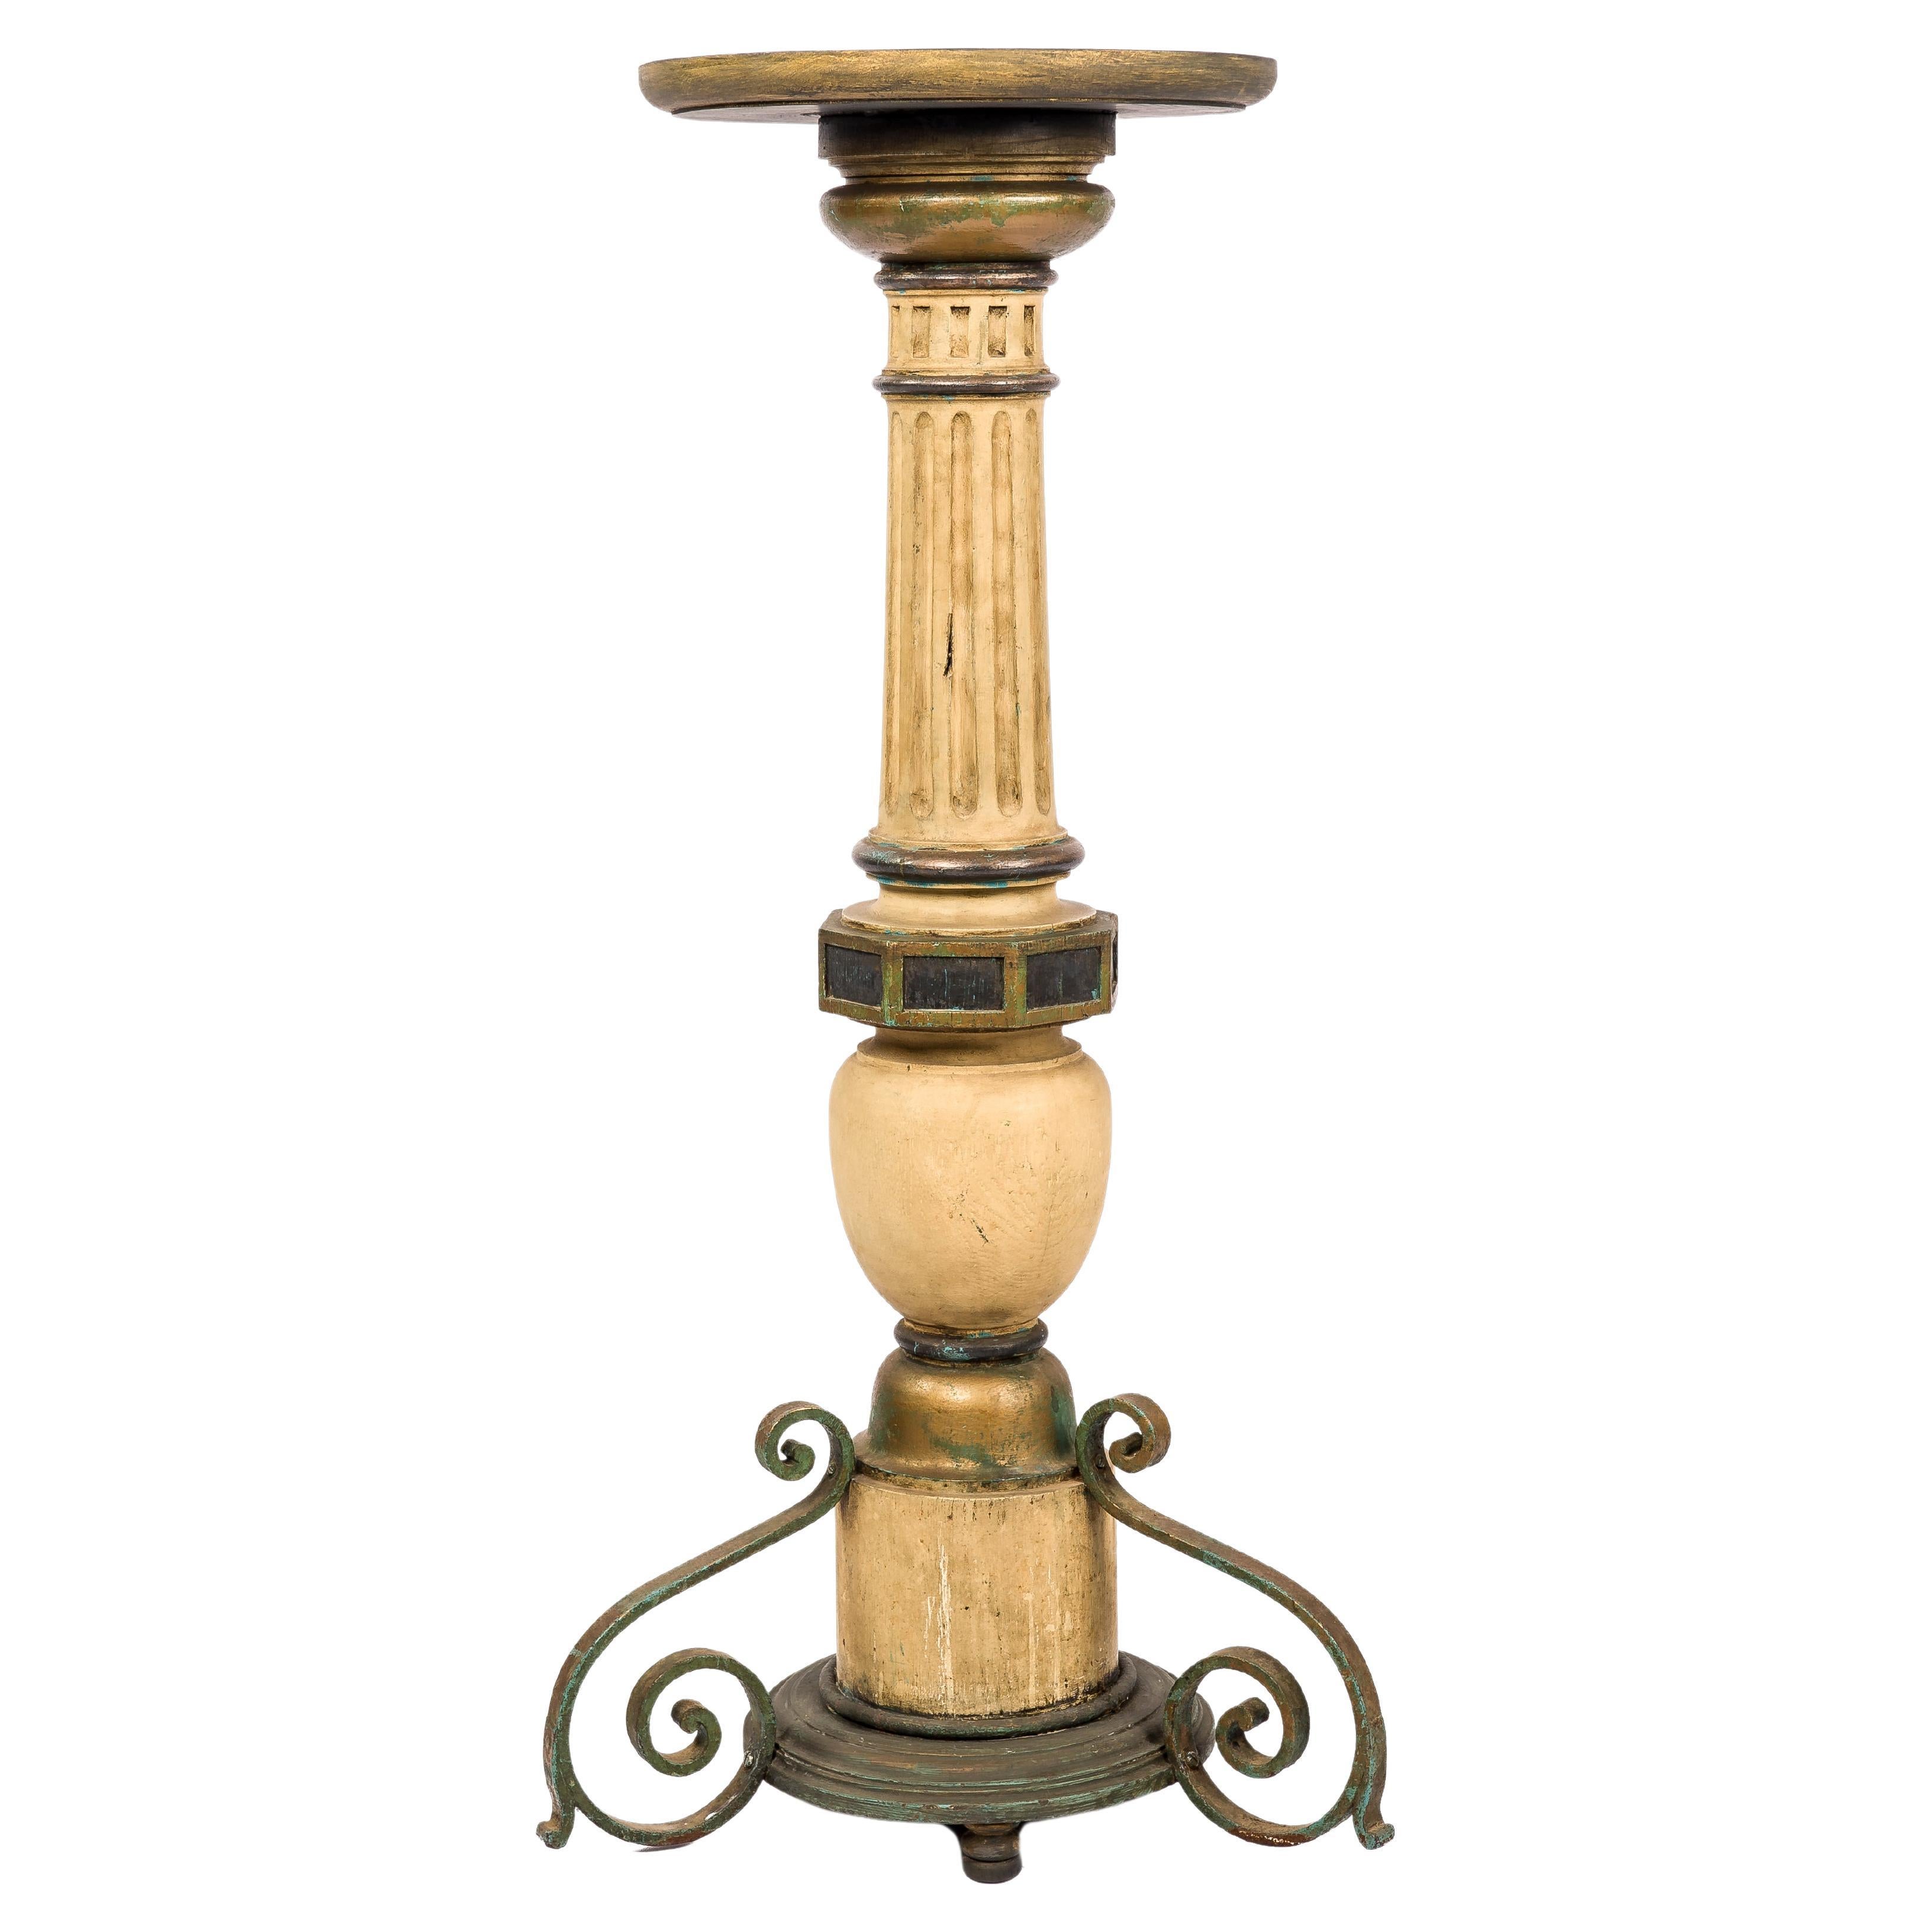 Antike Säule oder Sockel aus gedrechseltem Holz des 19. Jahrhunderts, polychrom bemalt